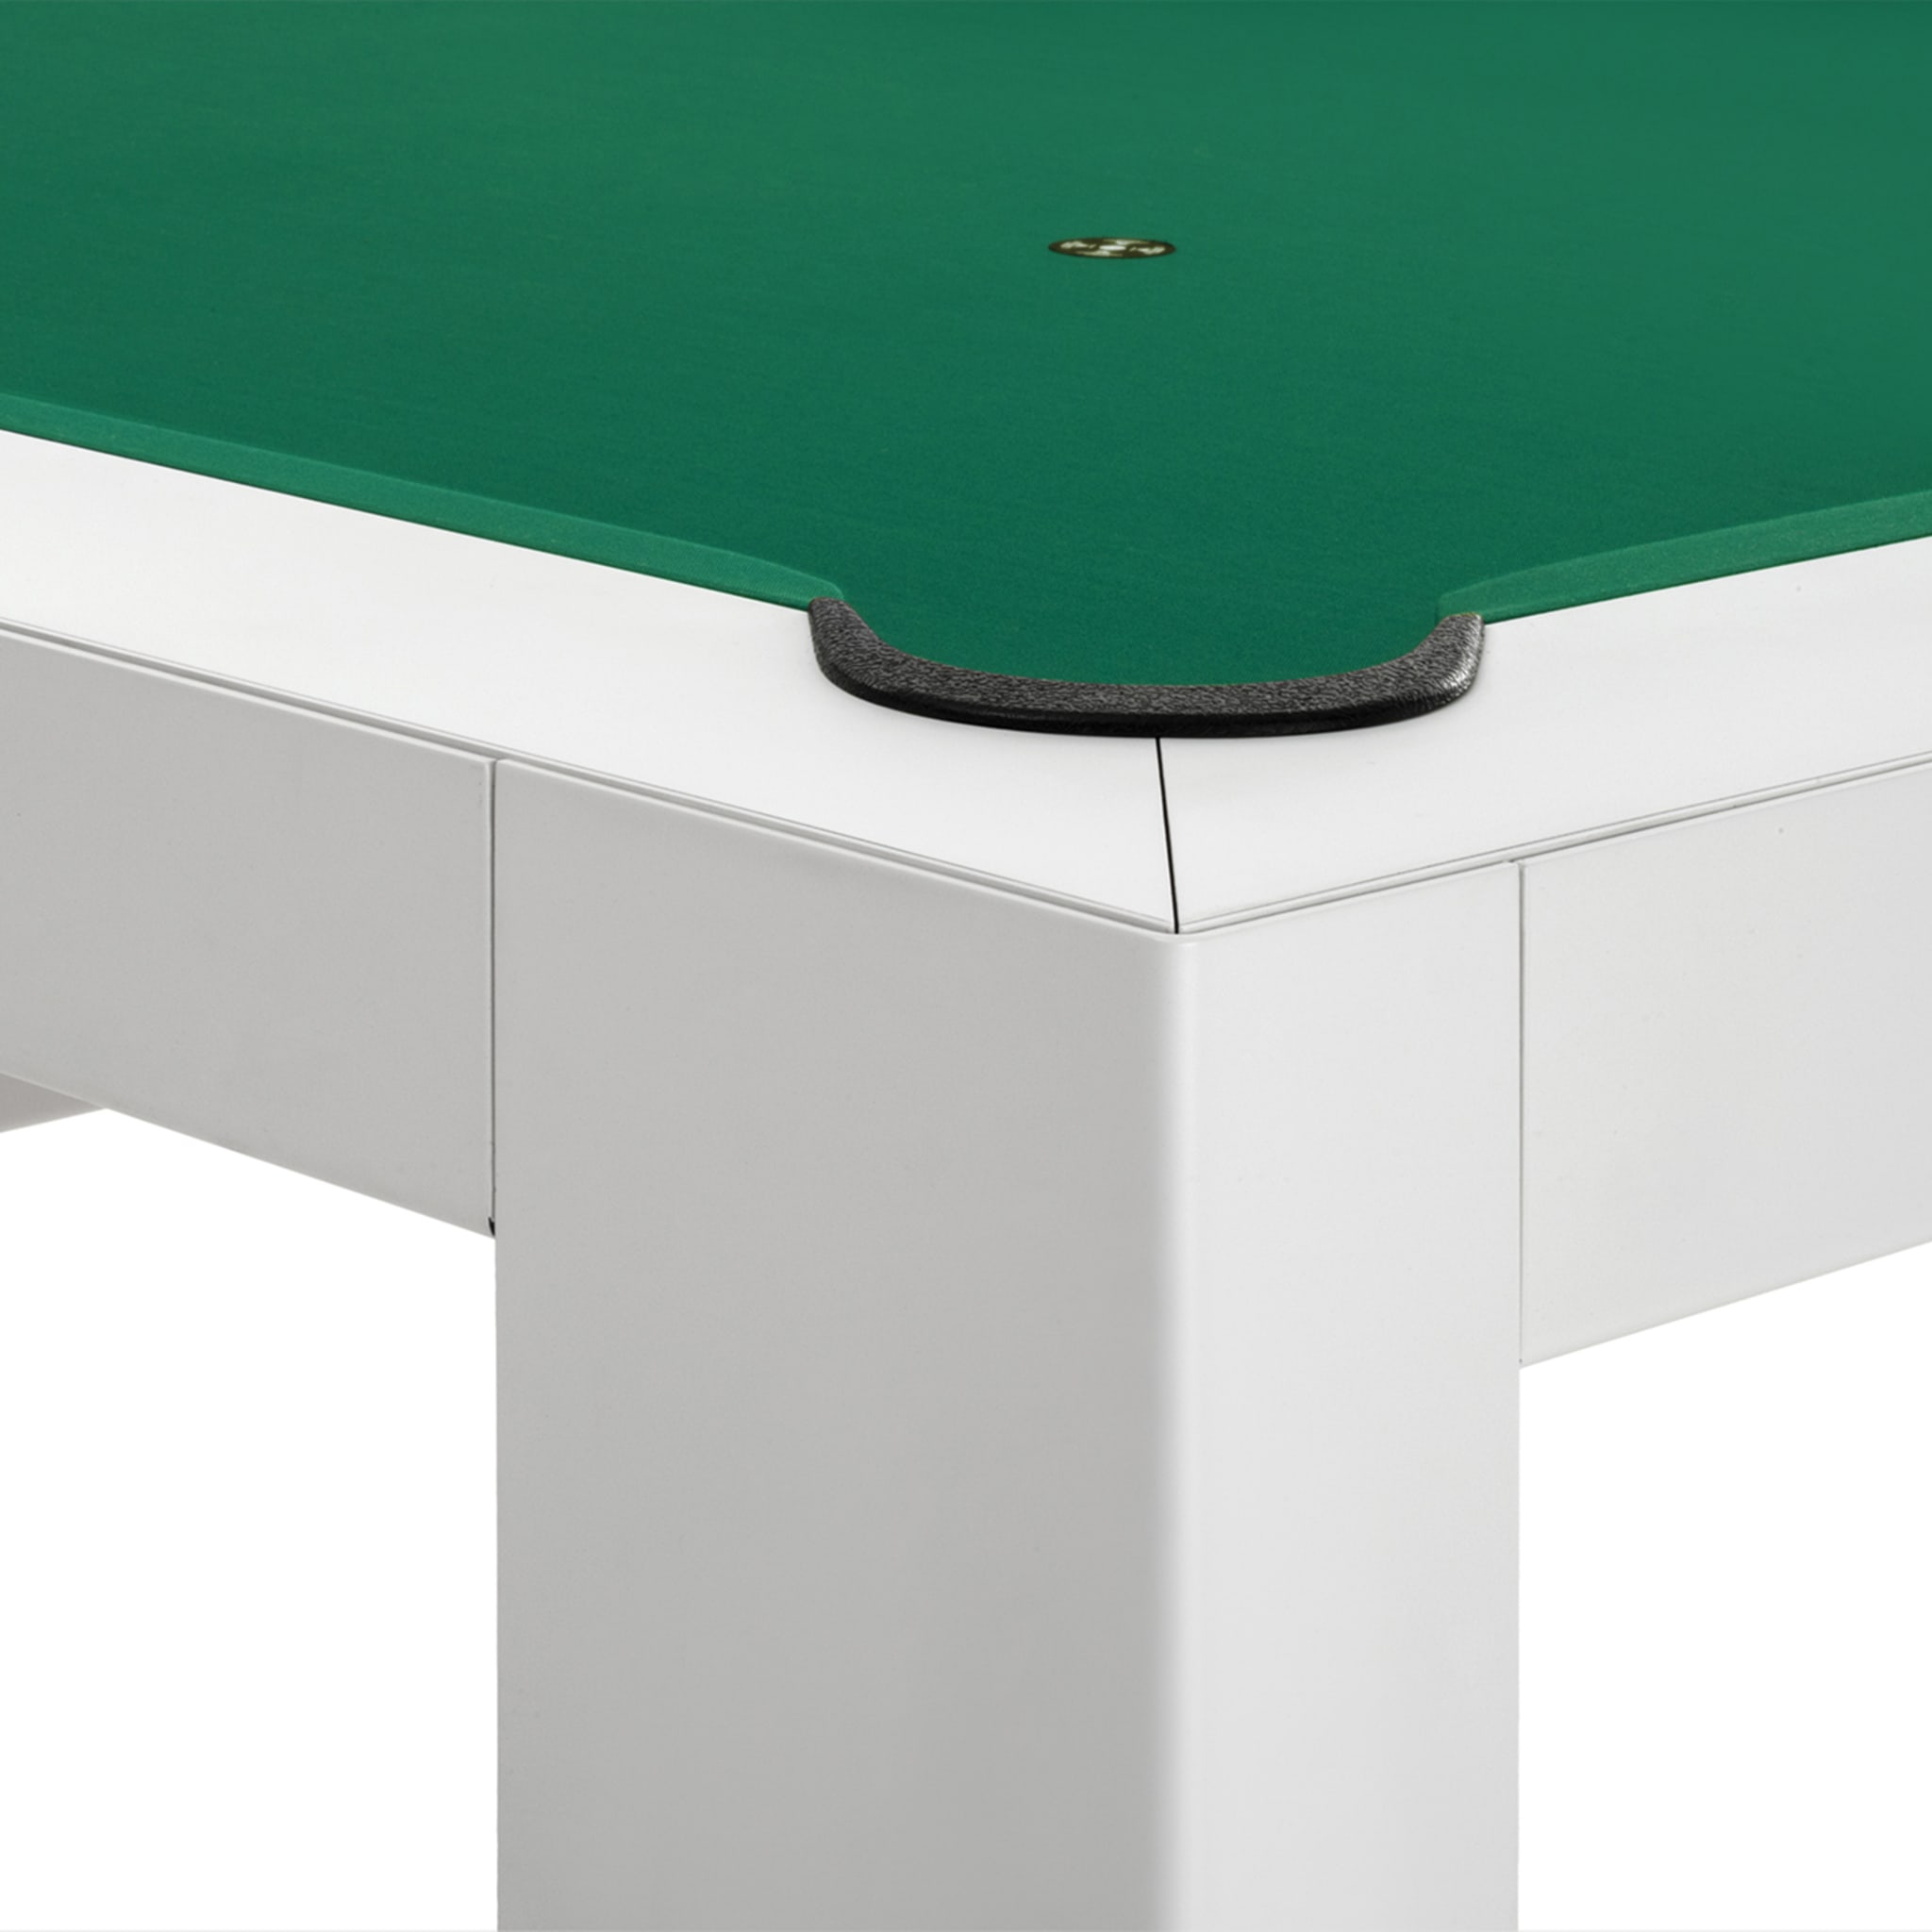 Carambola Cubista 7' White Pool Table by Basaglia + Rota Nodari - Alternative view 3